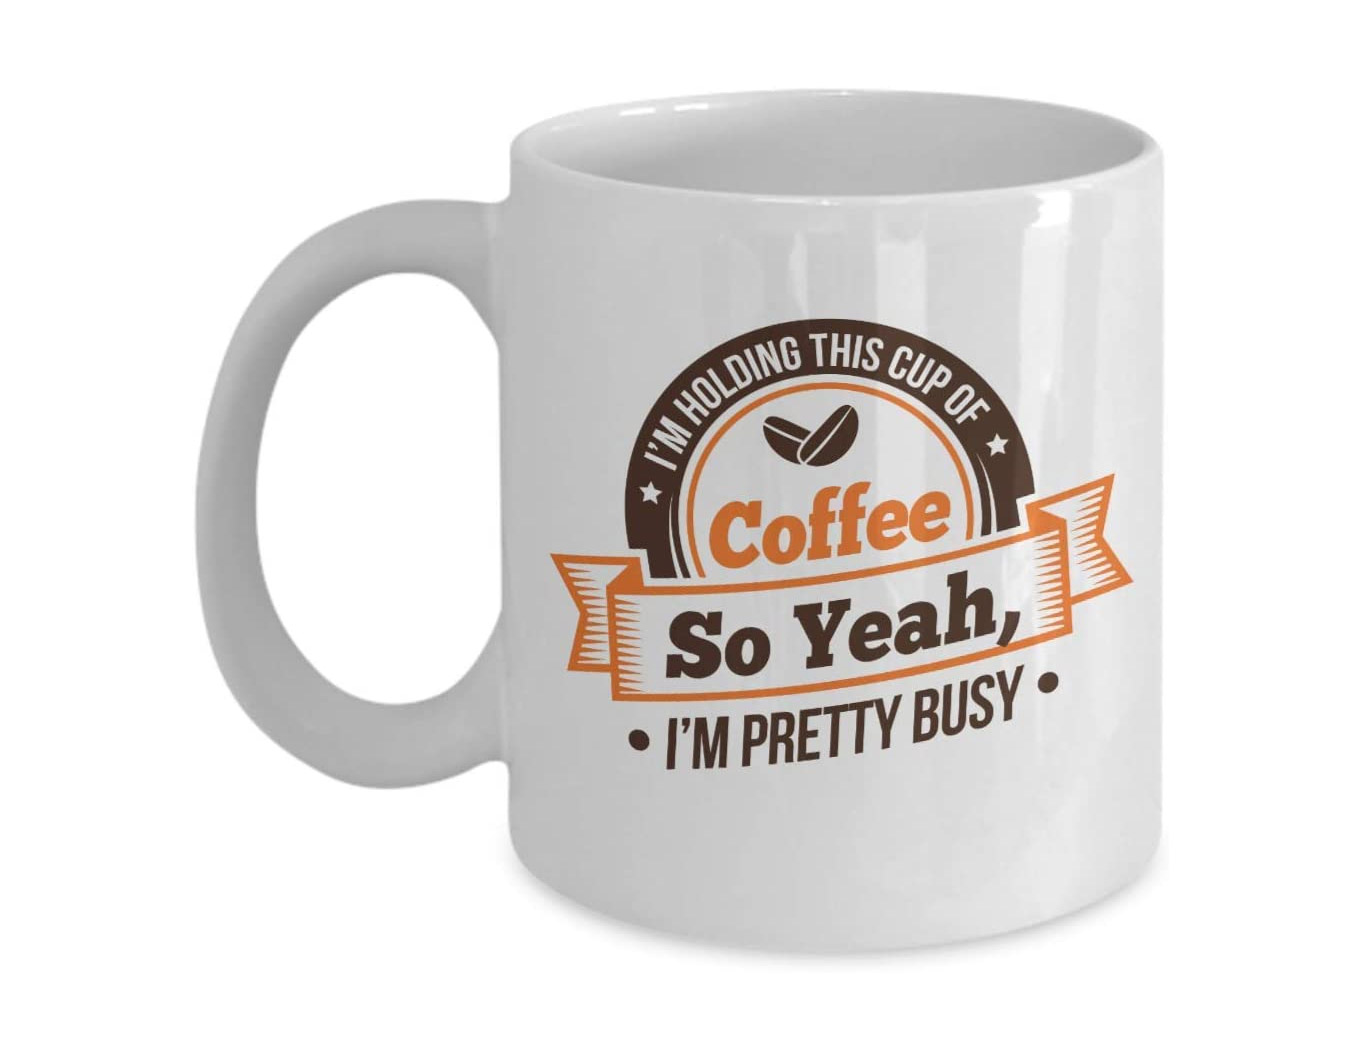 Im Holding A Cup Of Coffee So Yeah IM Pretty Busy - Funny Coffee mug